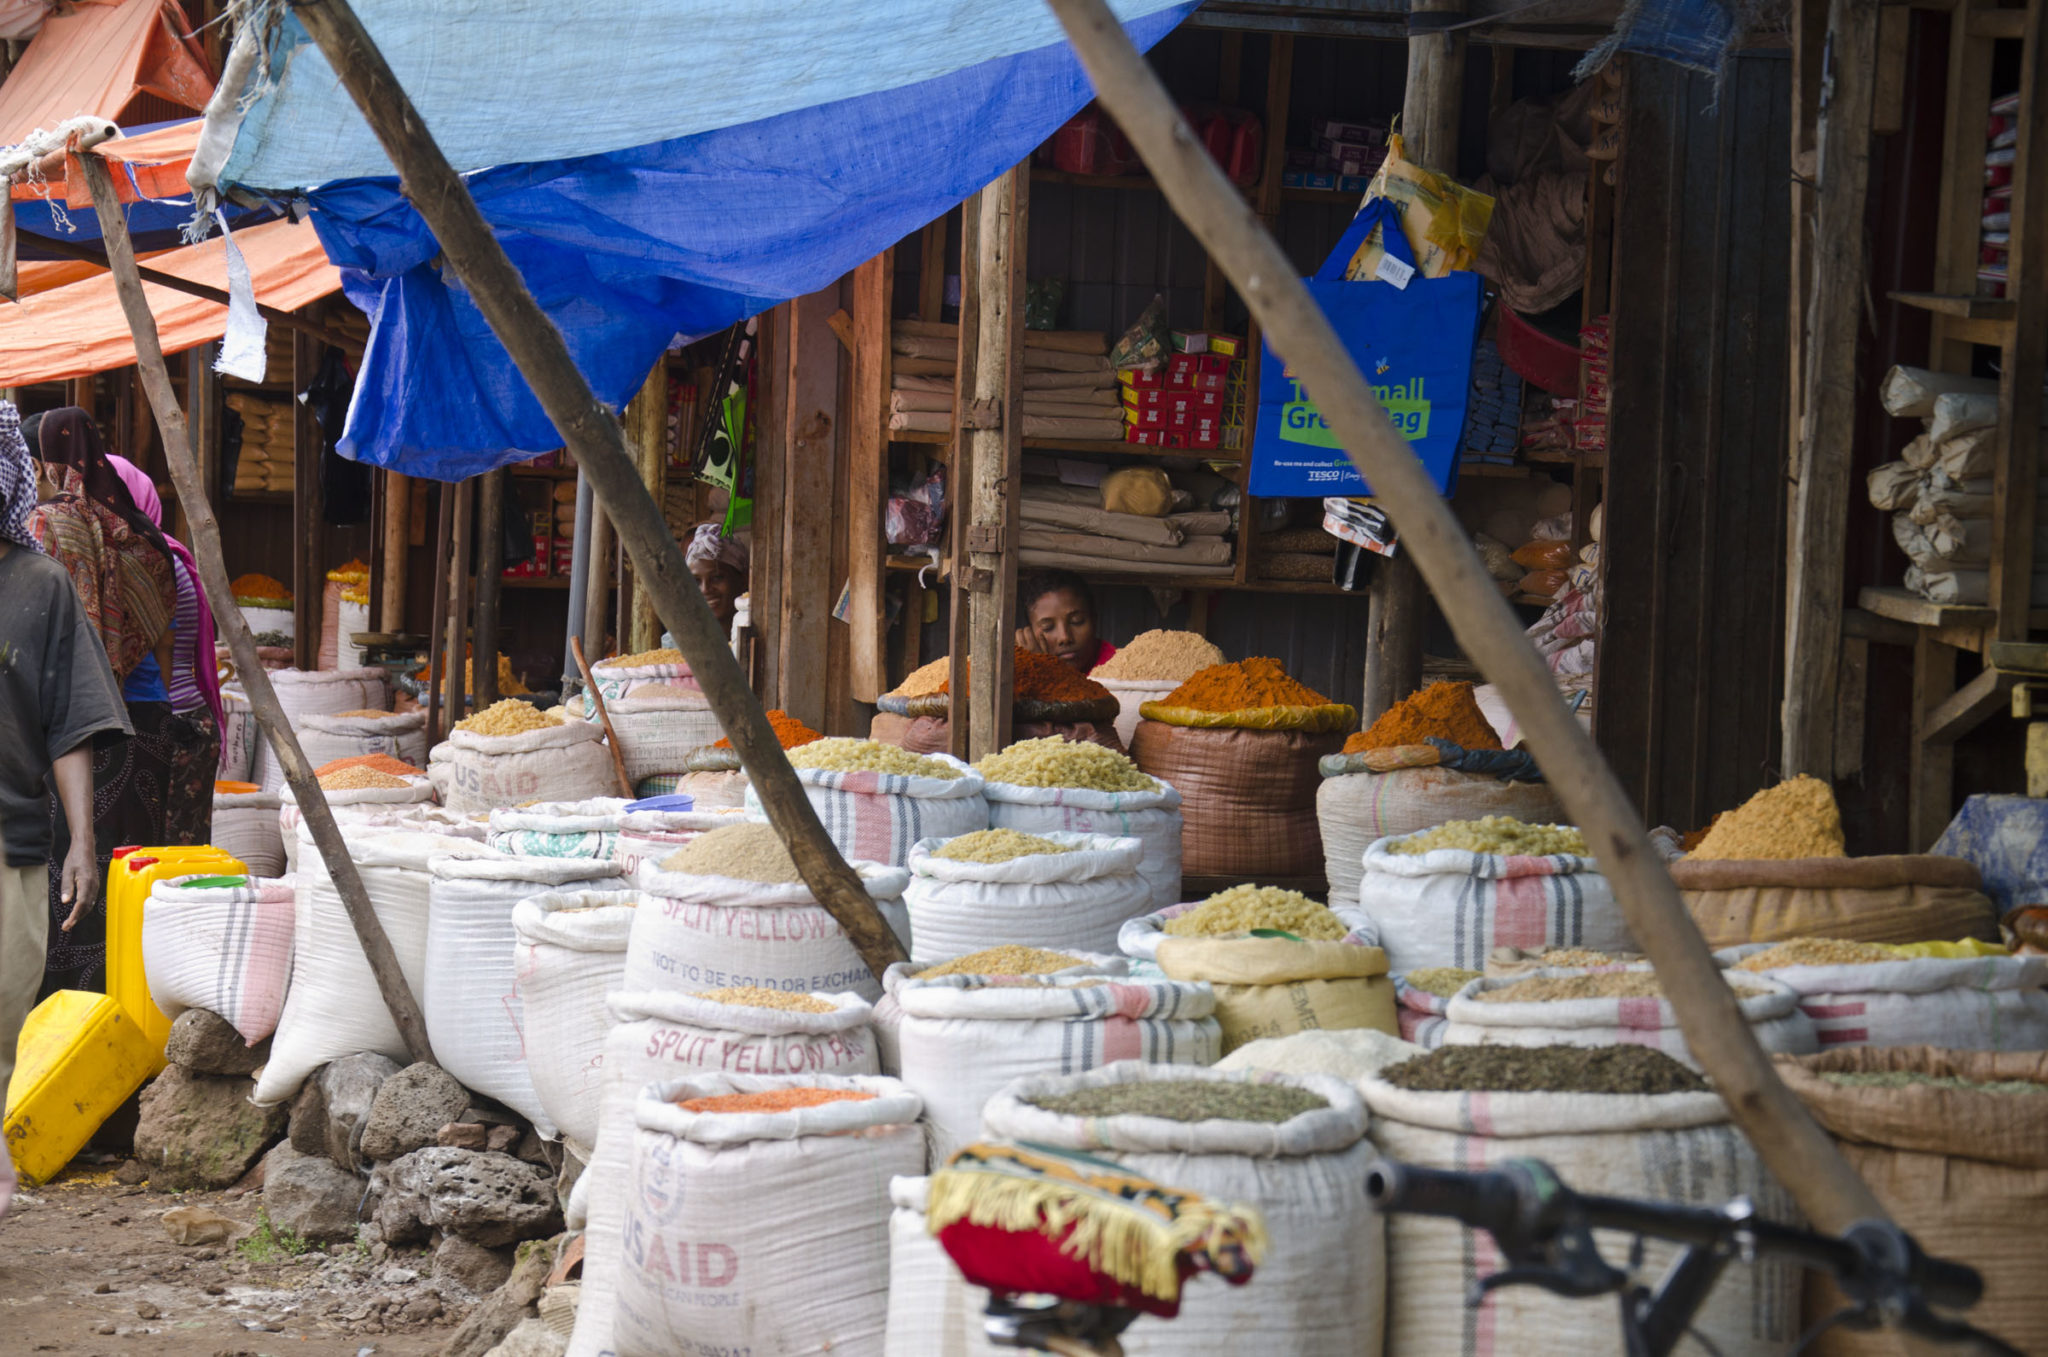 Sacks of grain and pulses on Ethiopian market stall